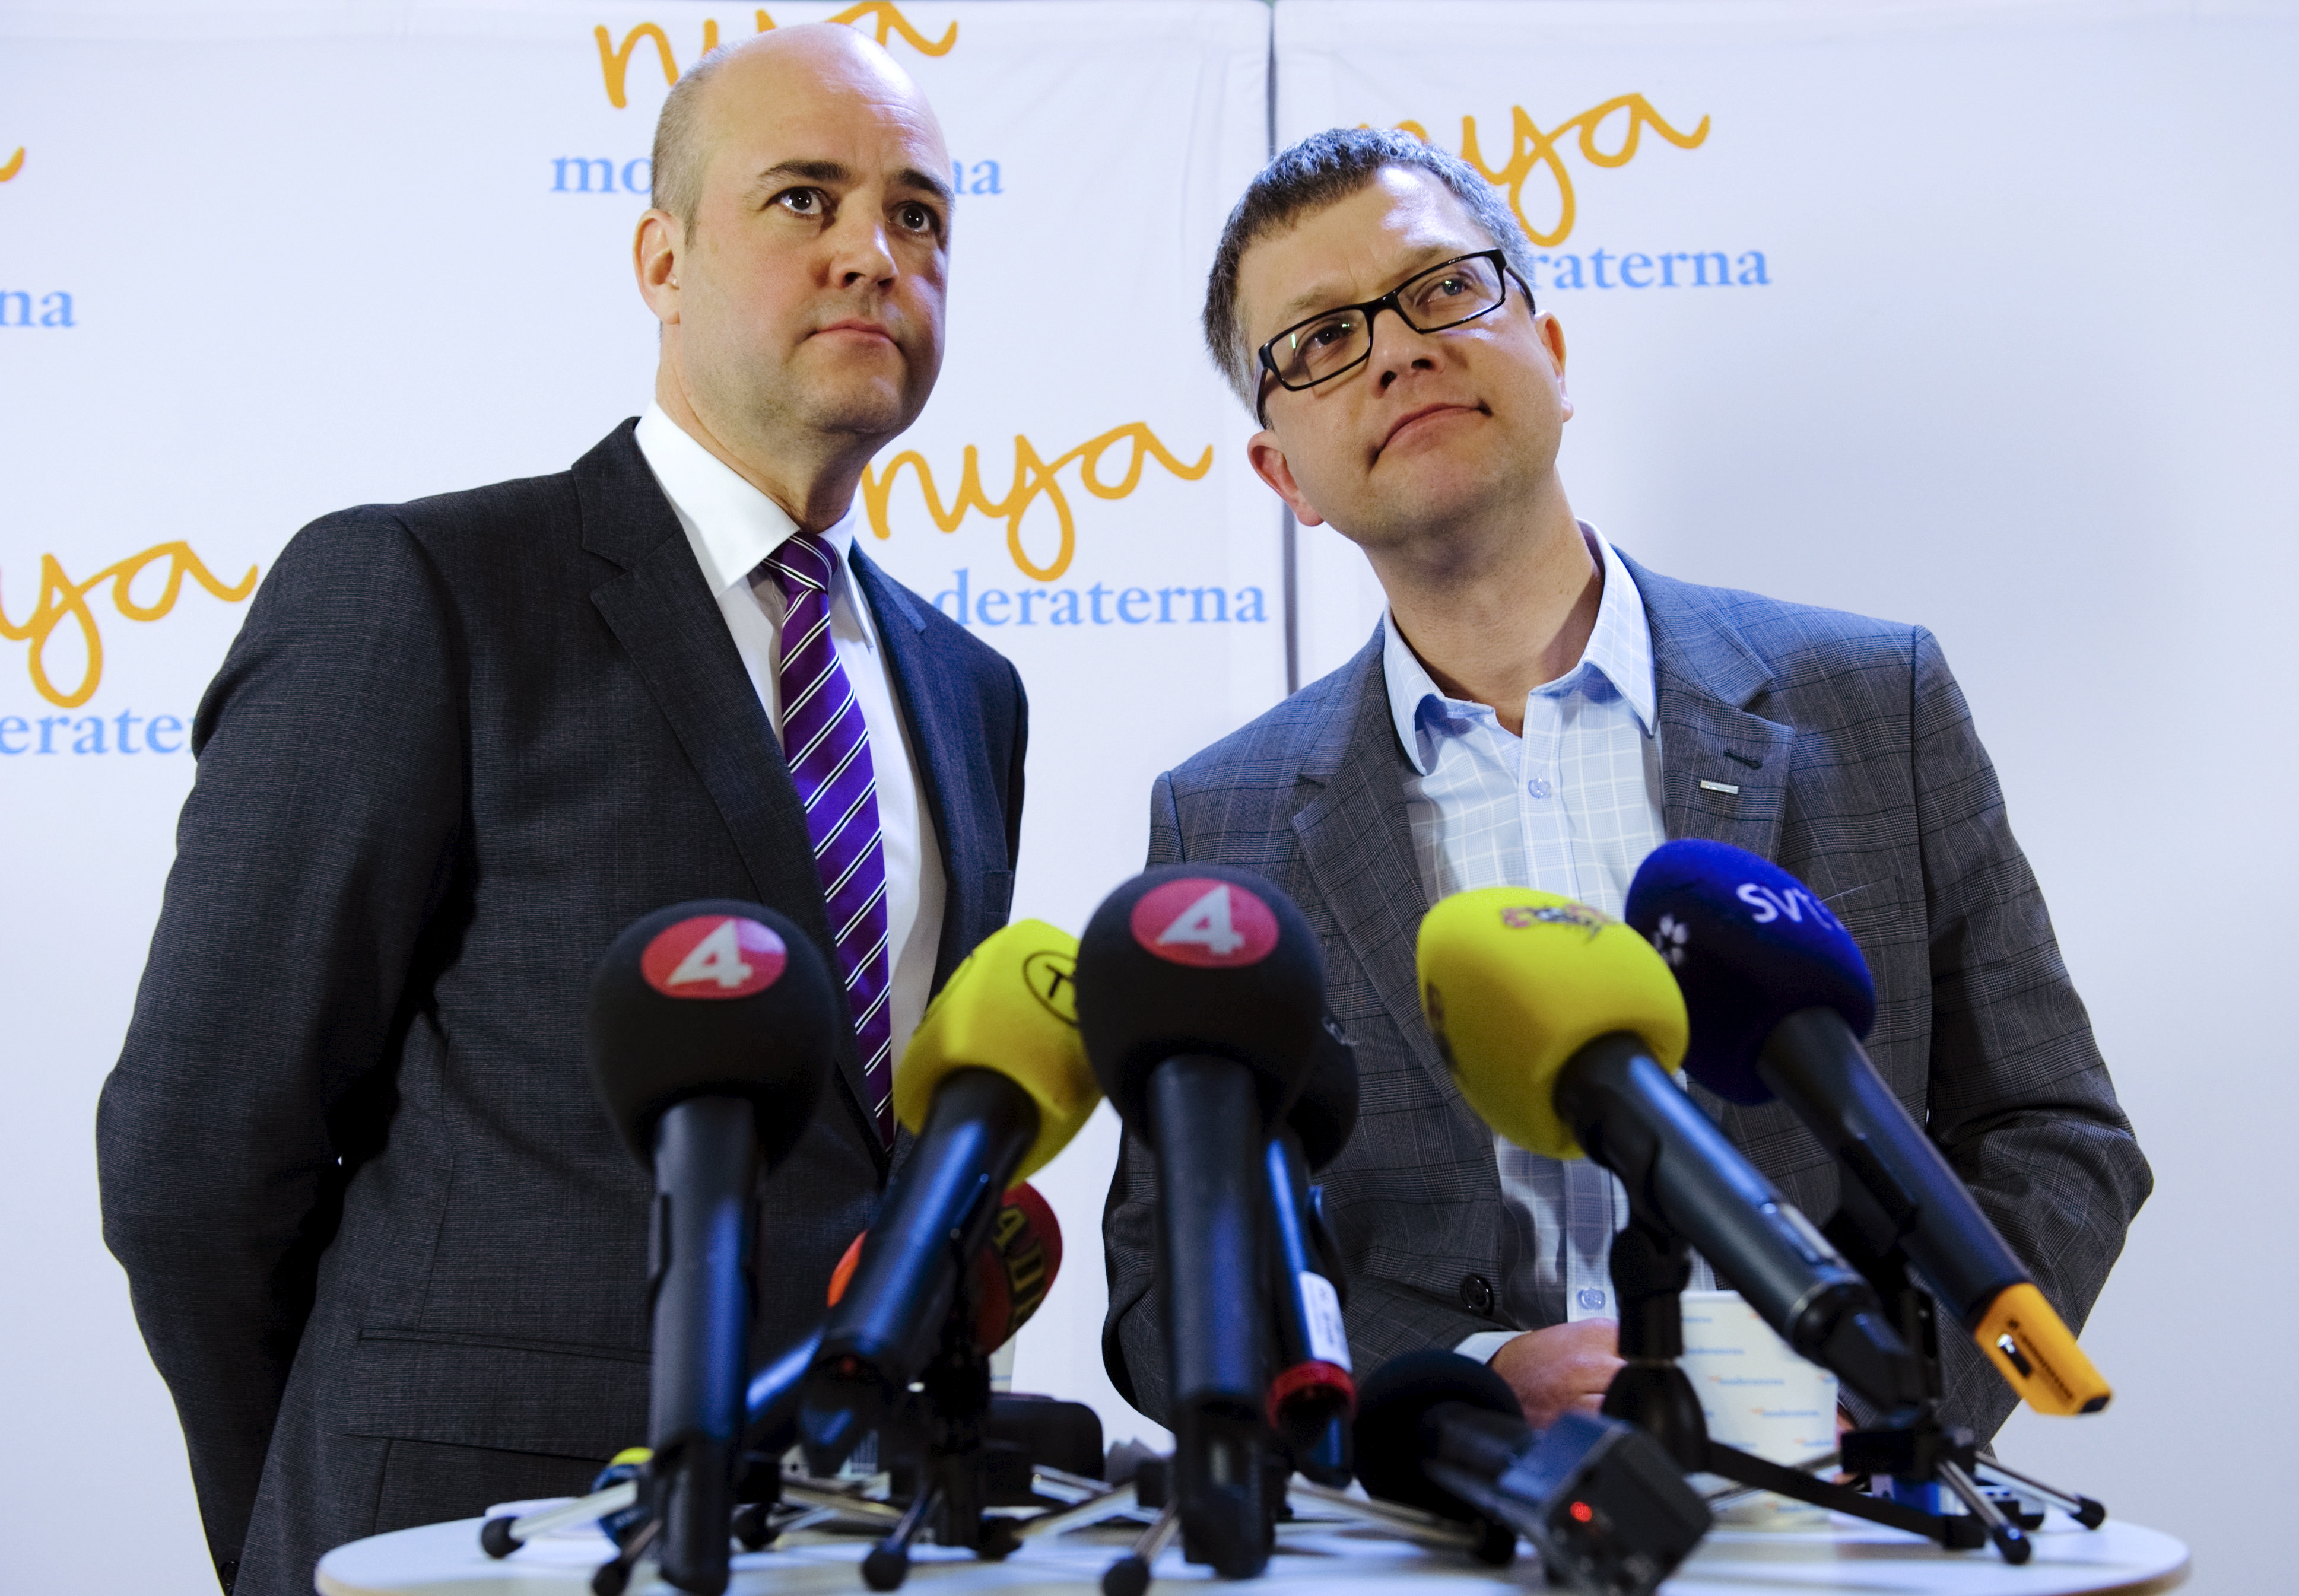 Kent Persson blir Moderaternas nye partisekreterare efter Sofia Arkelsten. 